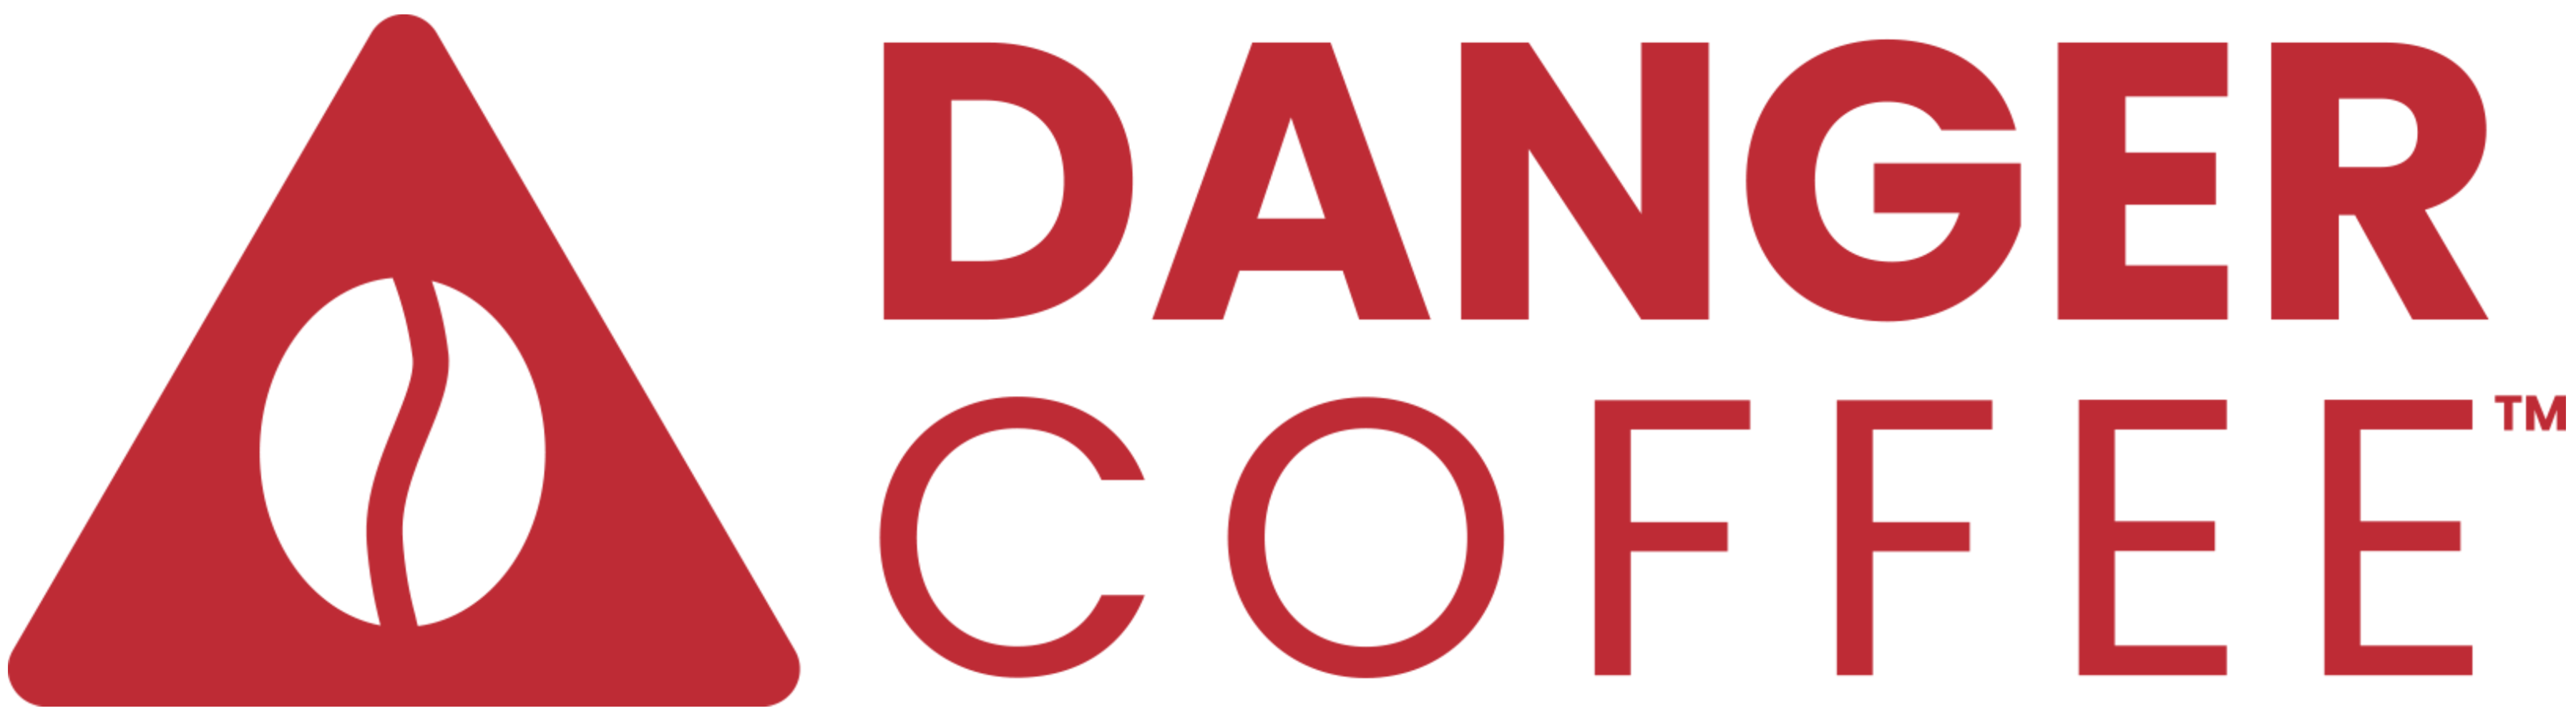 Danger Coffee Help Center logo